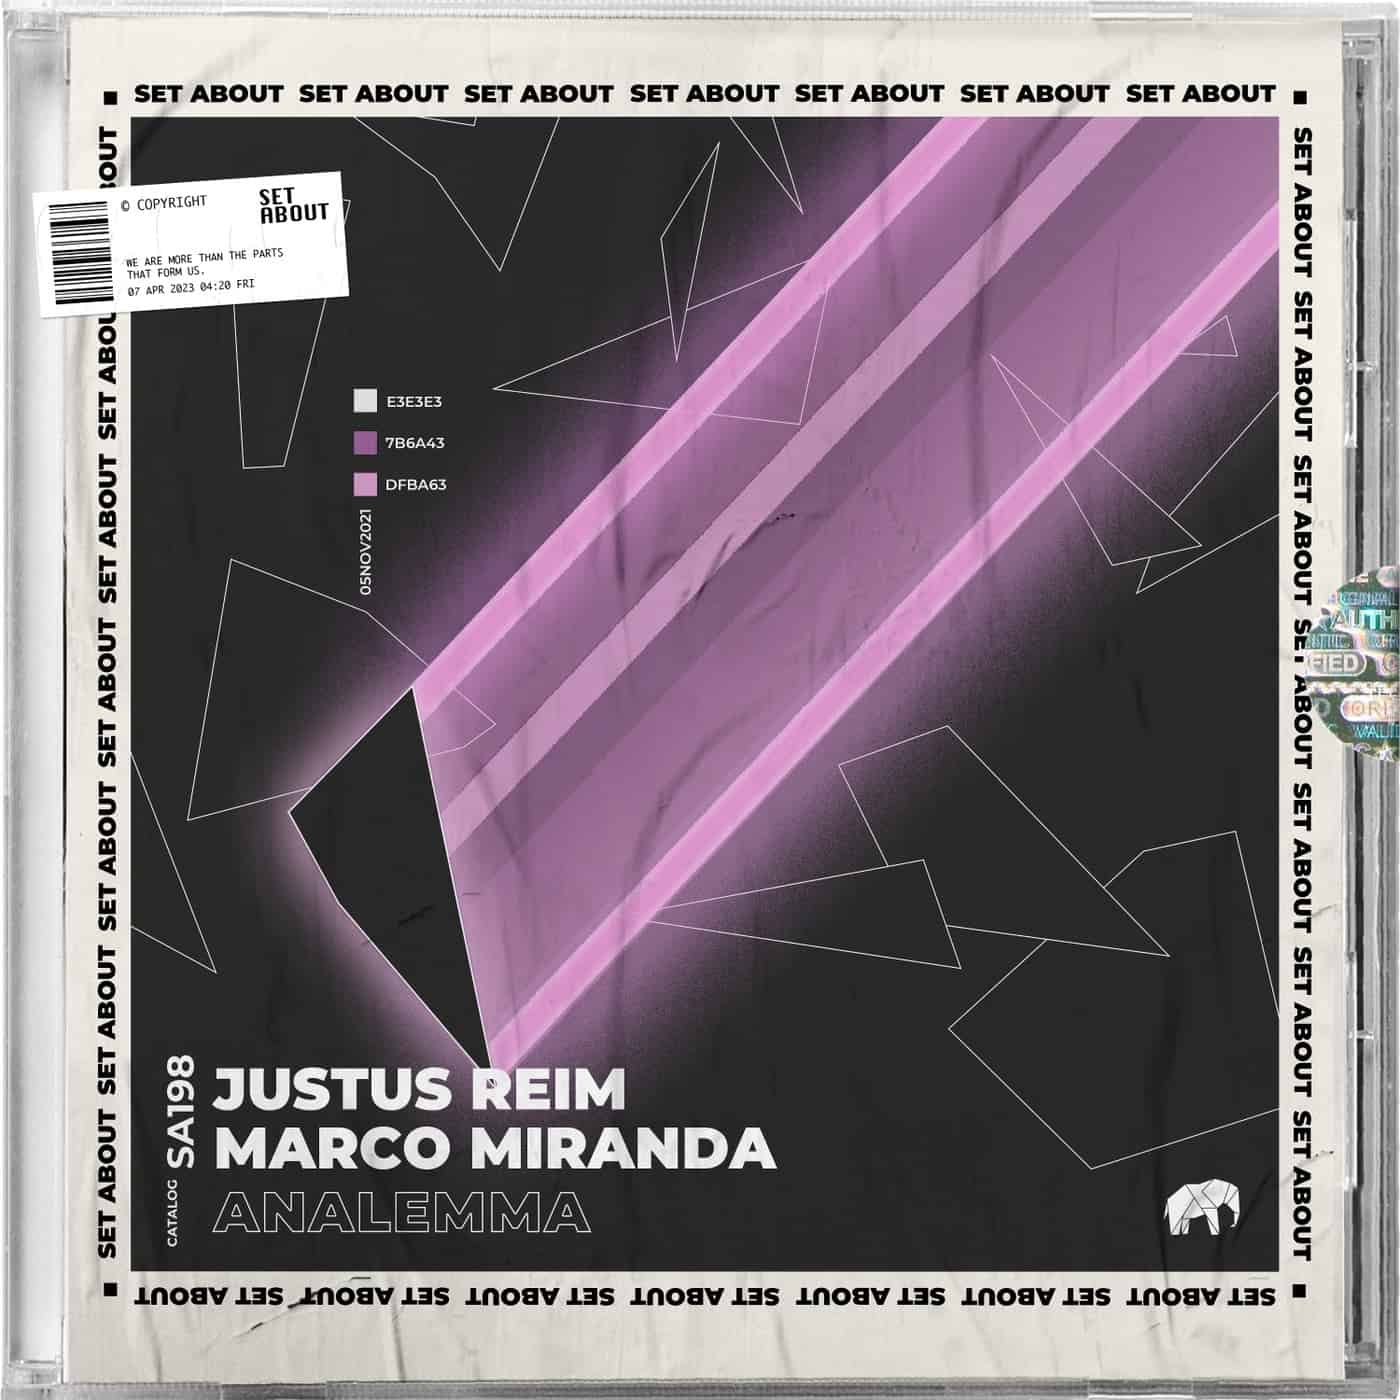 Download Justus Reim, Marco Miranda - Analemma on Electrobuzz